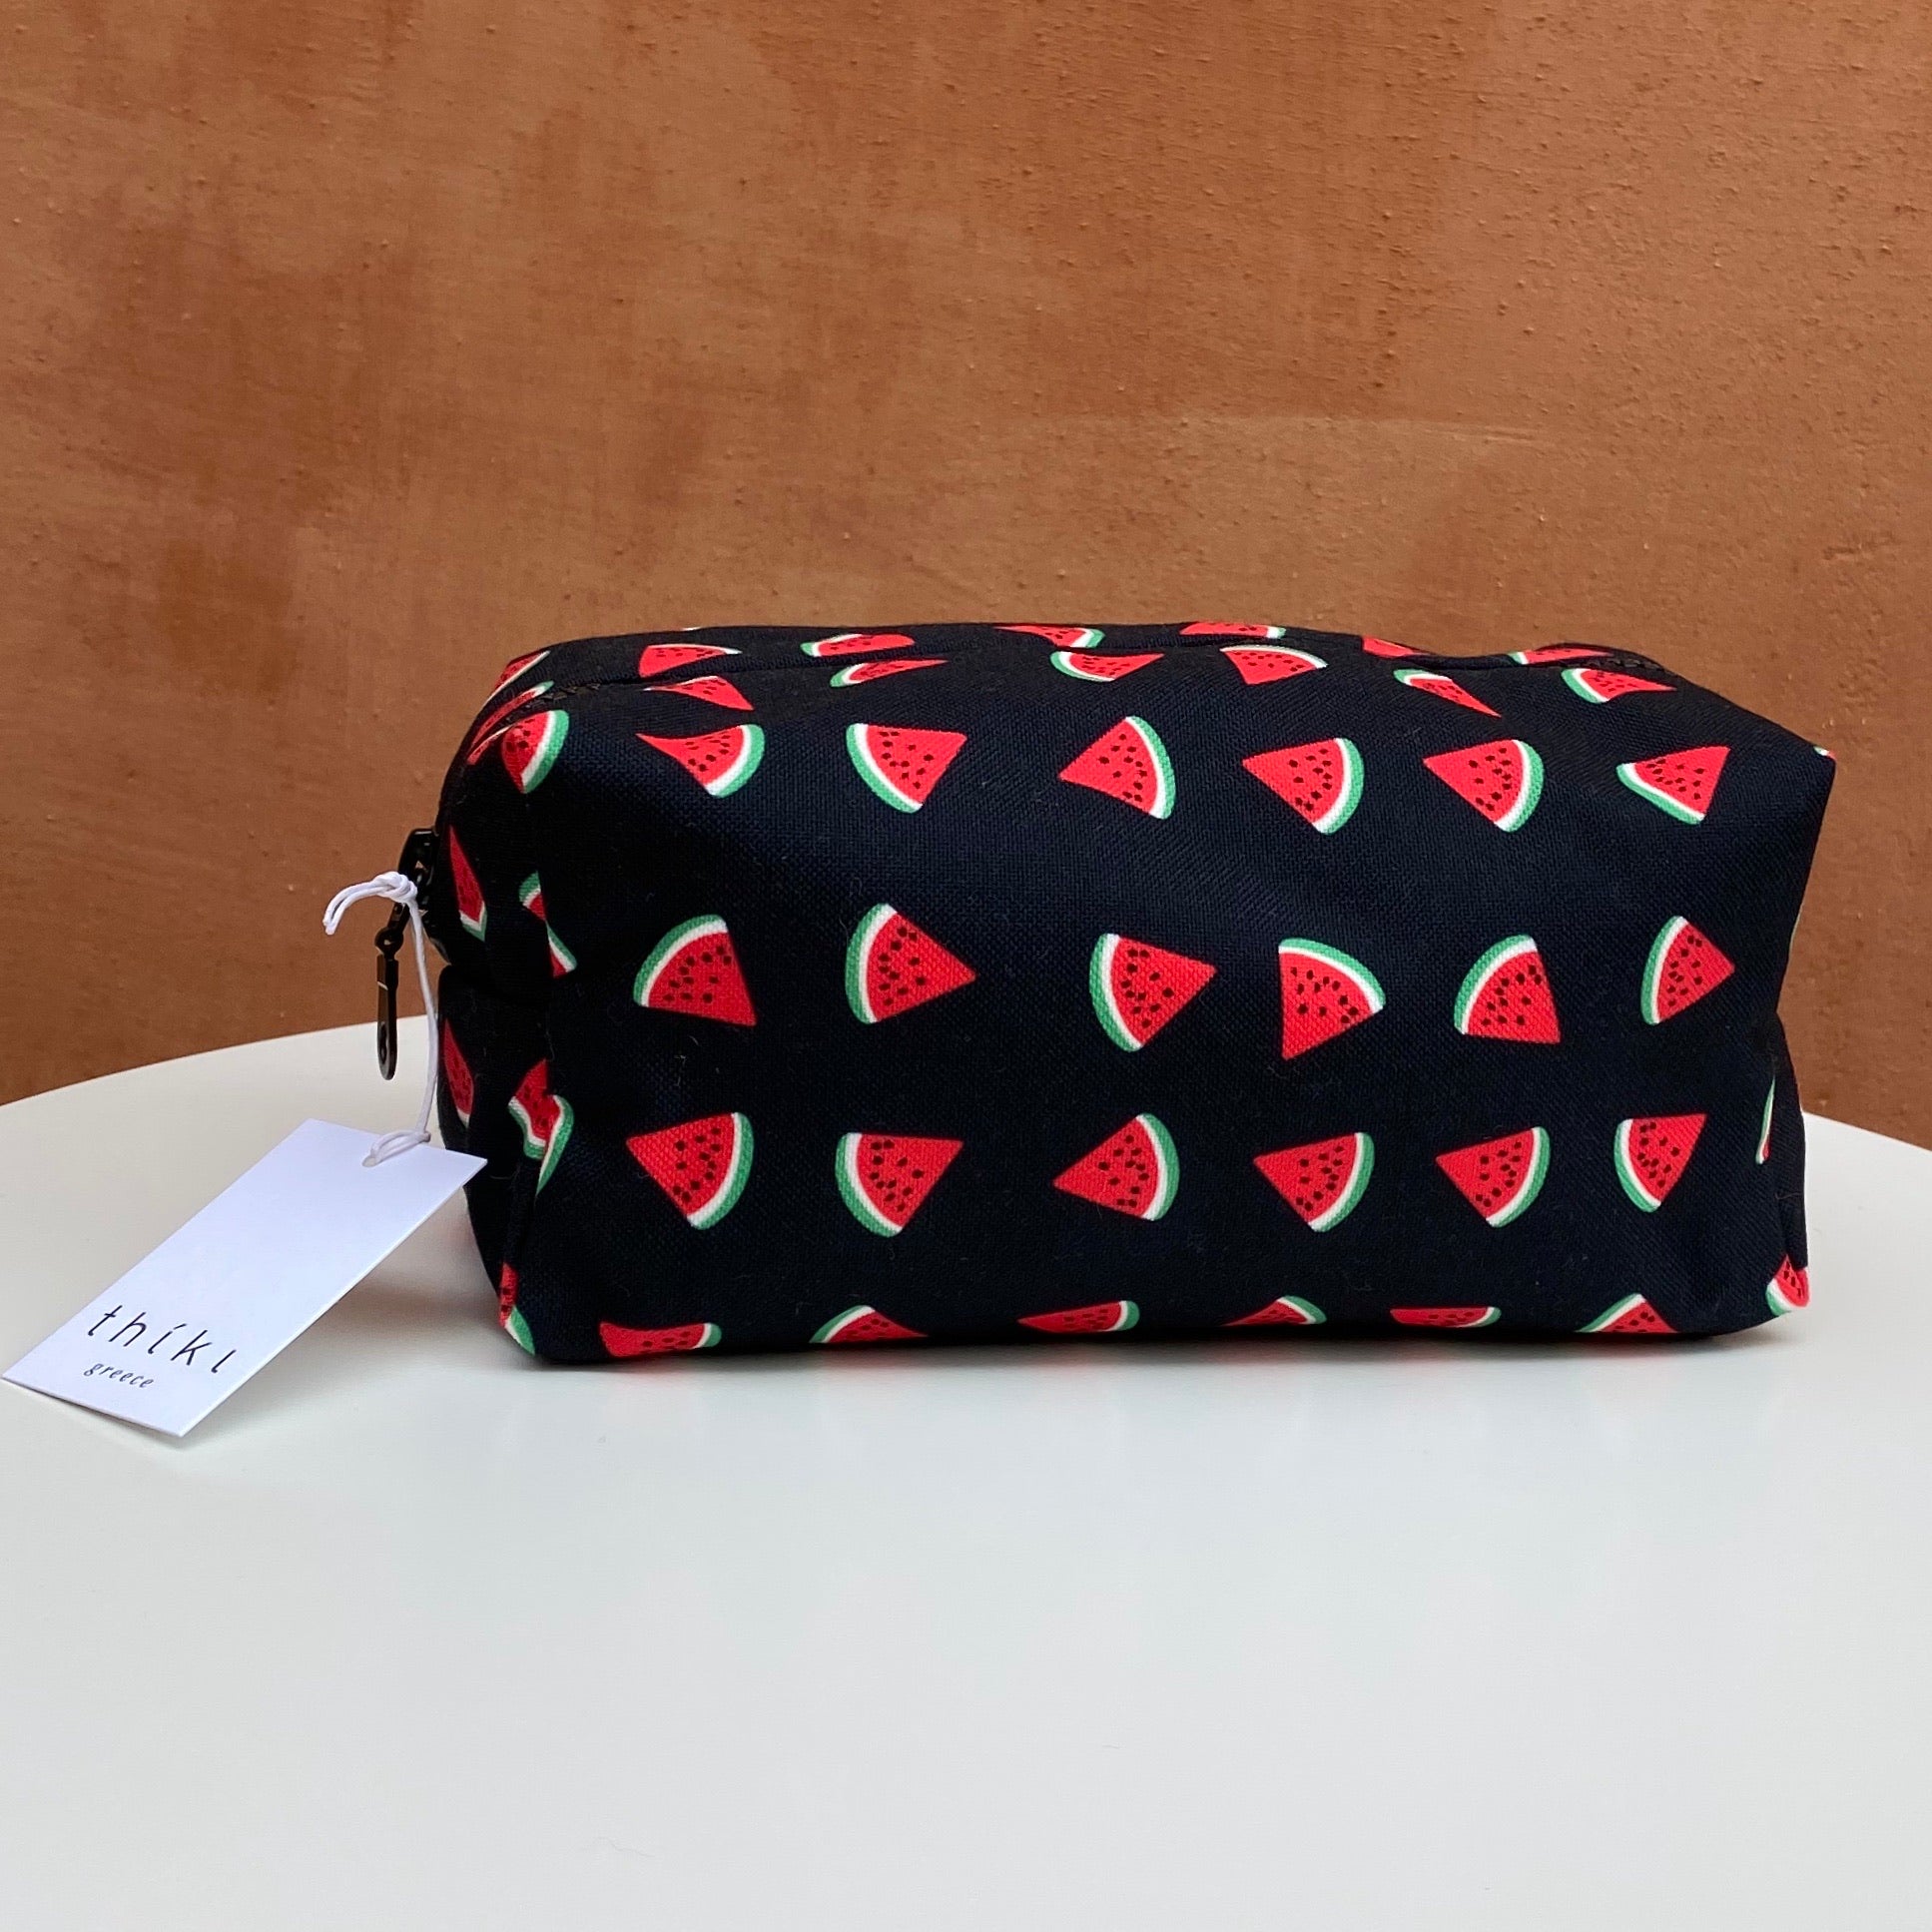 Black watermelon box bag